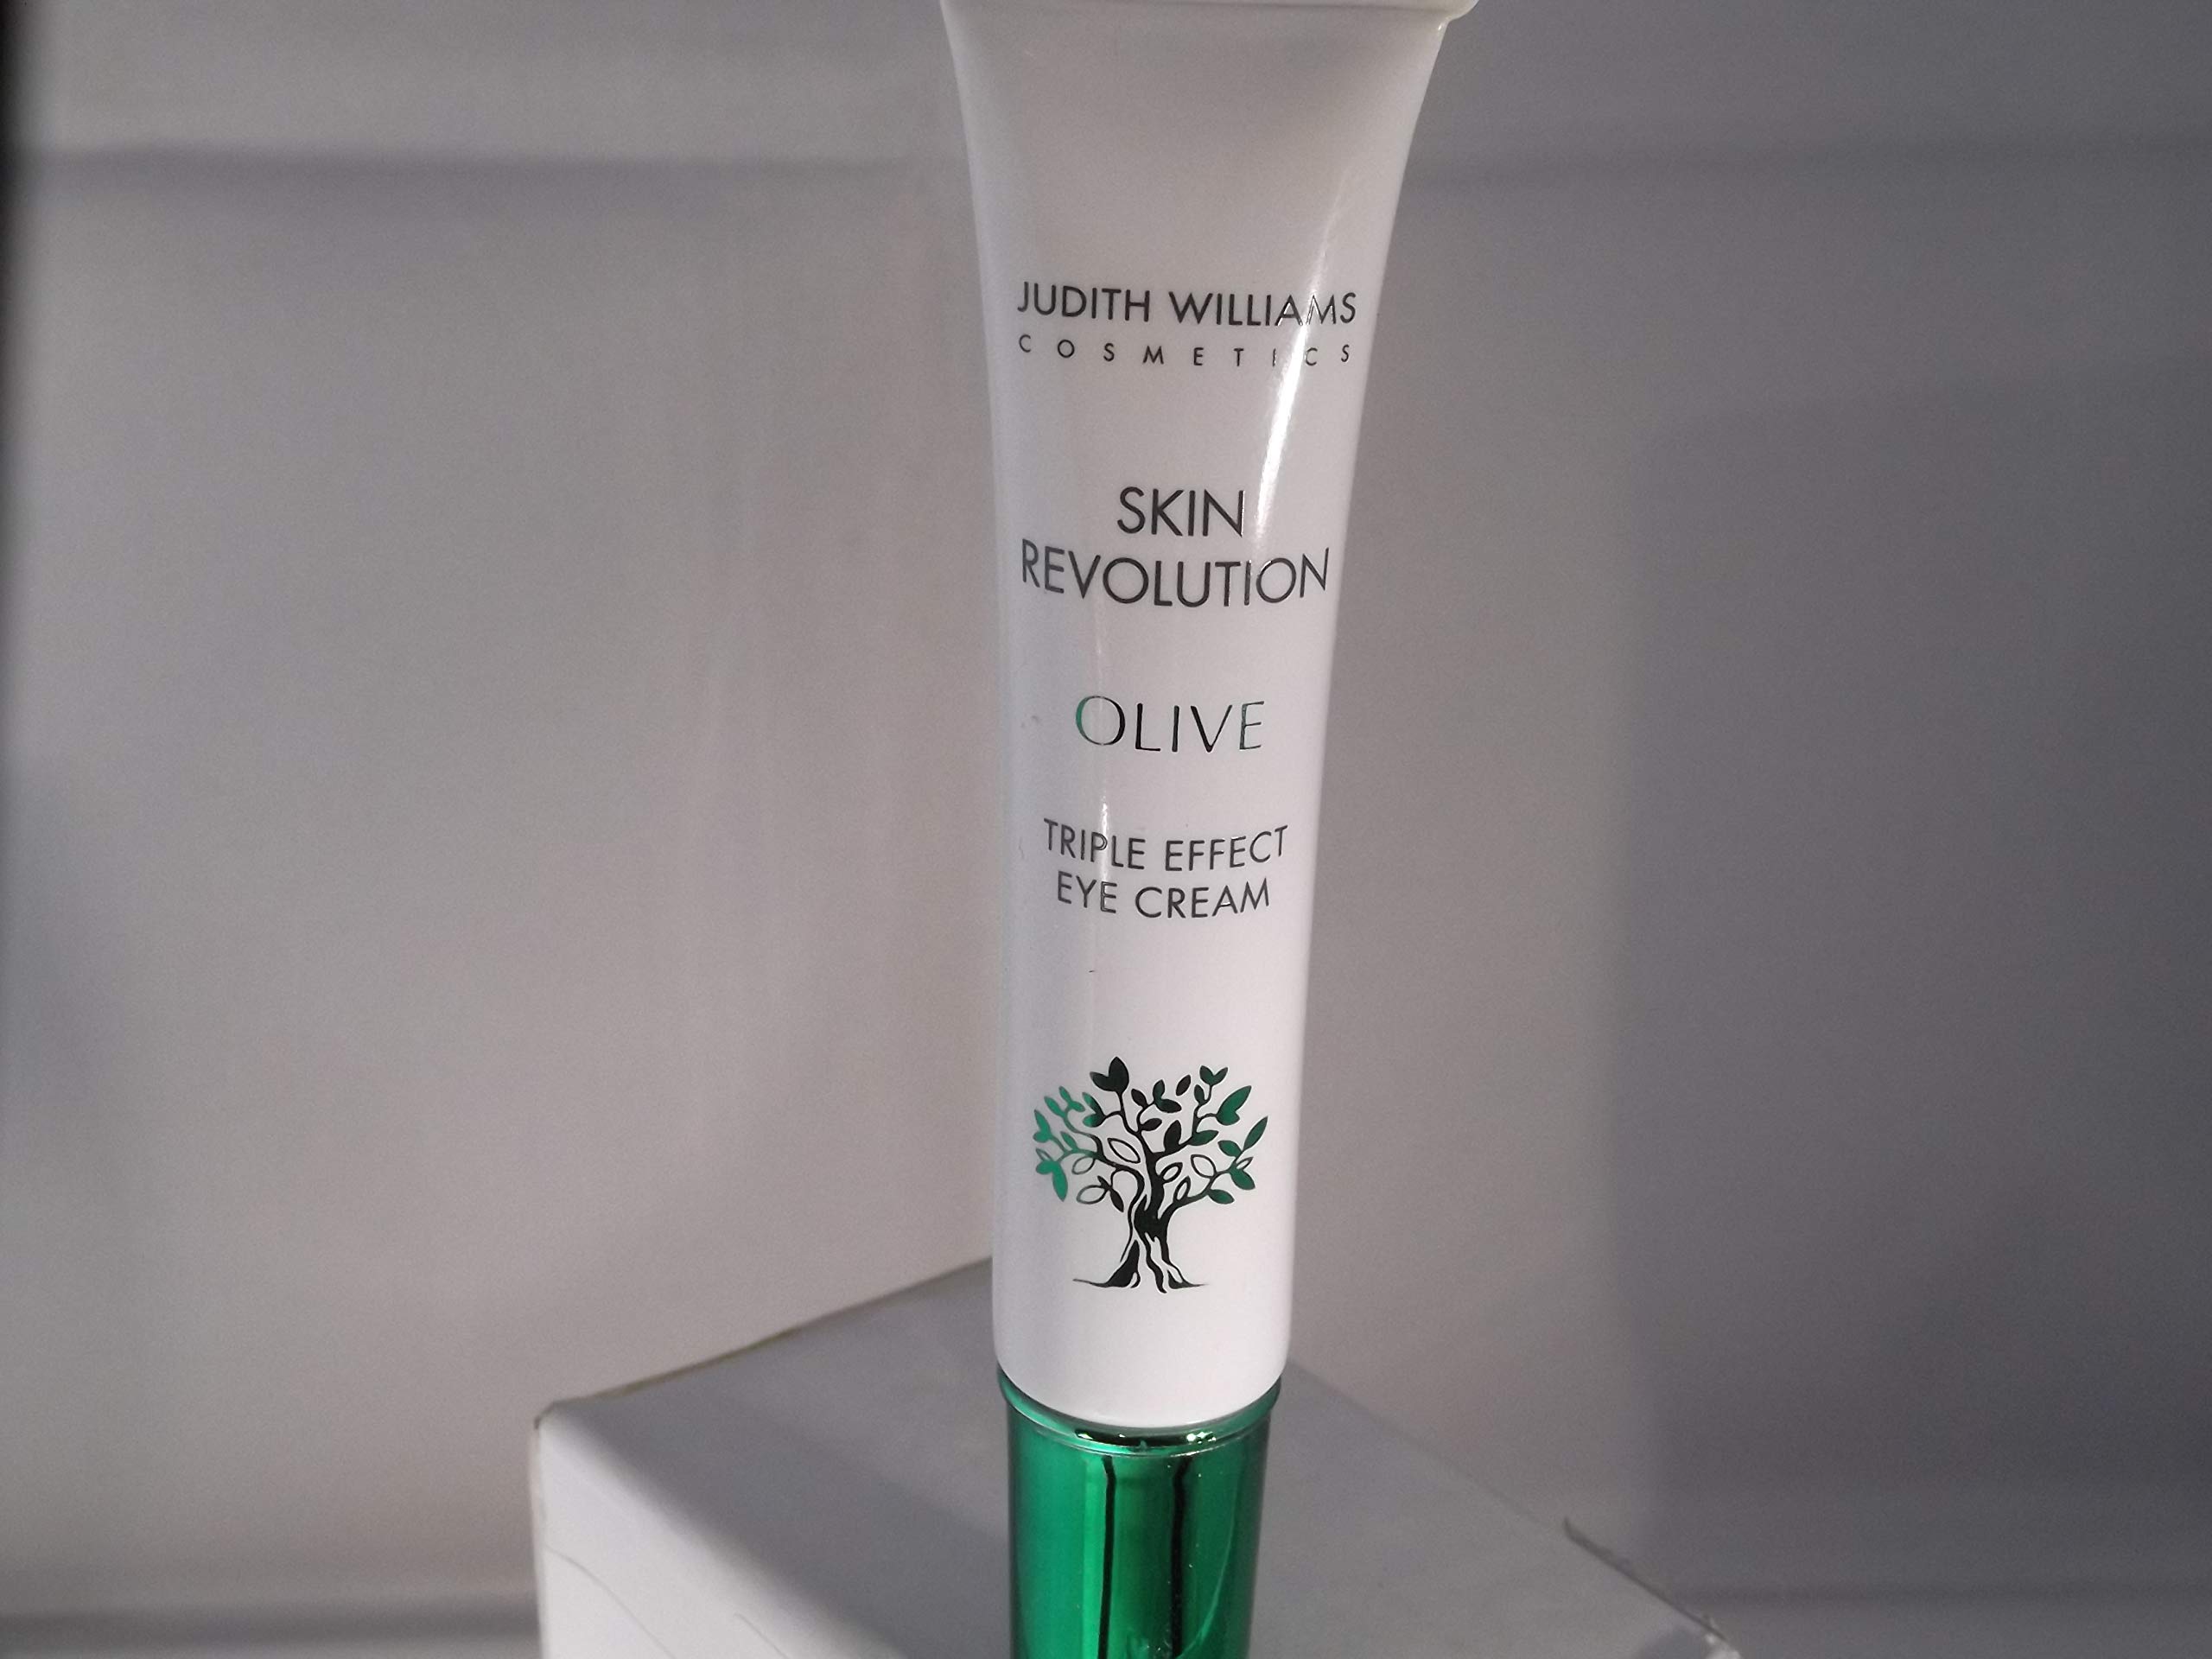 Judith Williams Skin Revolution Olive Eye Cream